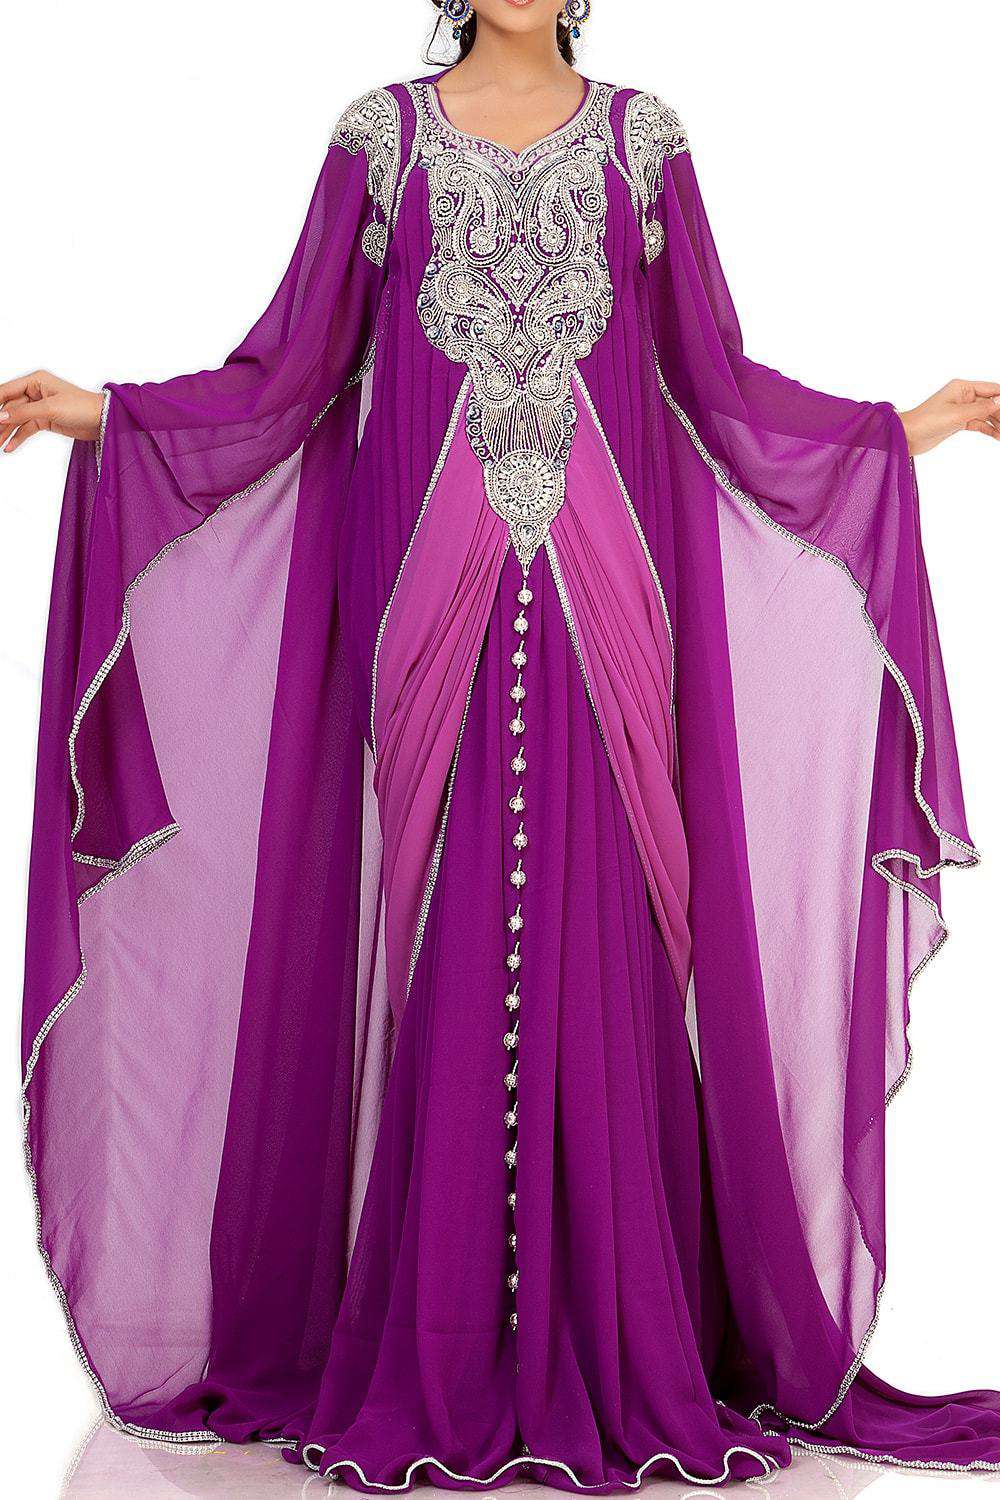 Classy Purple Color Designer Arabic Islamic Dress